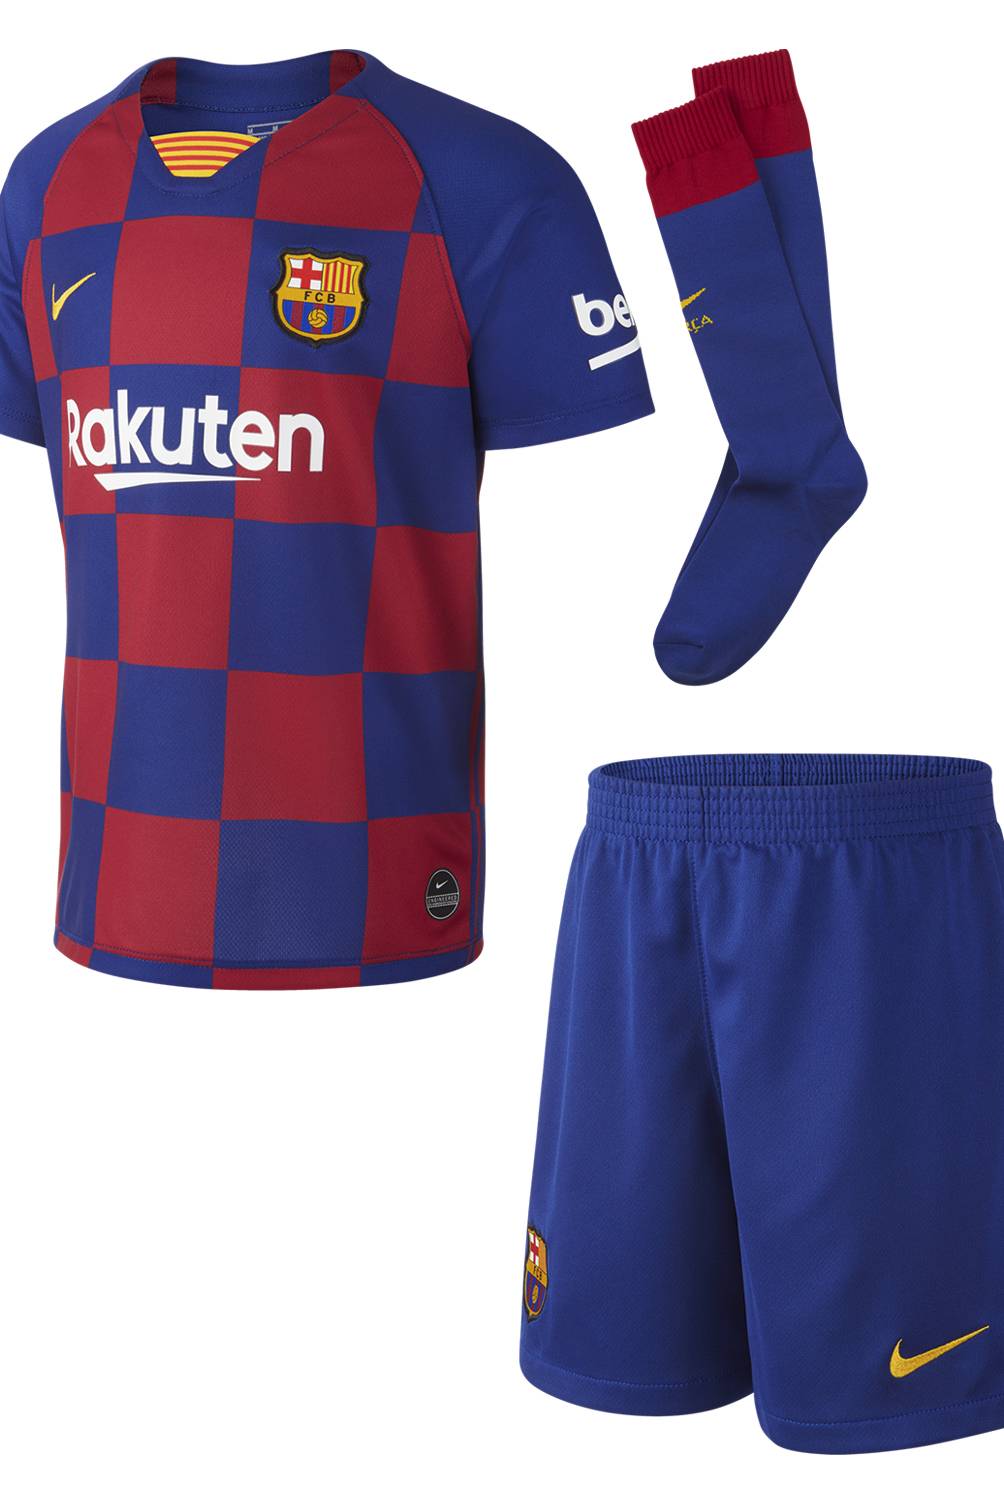 Nike - Nike Kit de Futbol Niño FC Barcelona